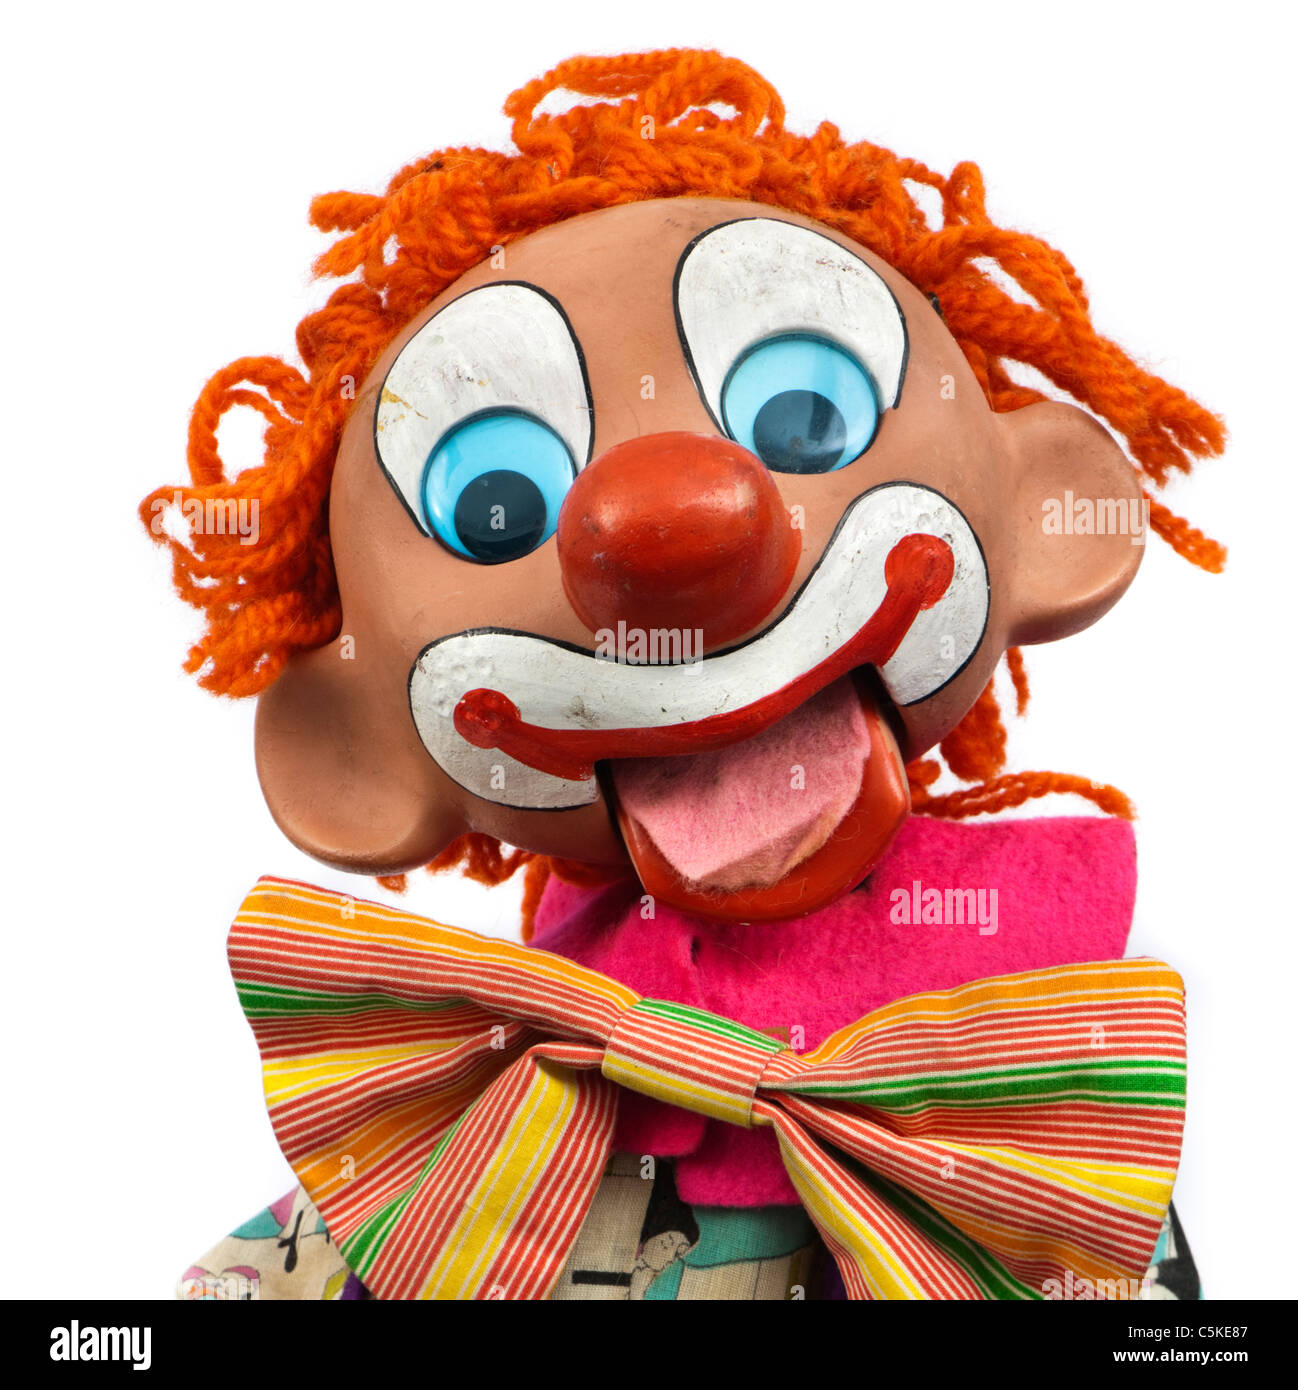 Vintage hand puppet clown / ventriloquist doll Stock Photo